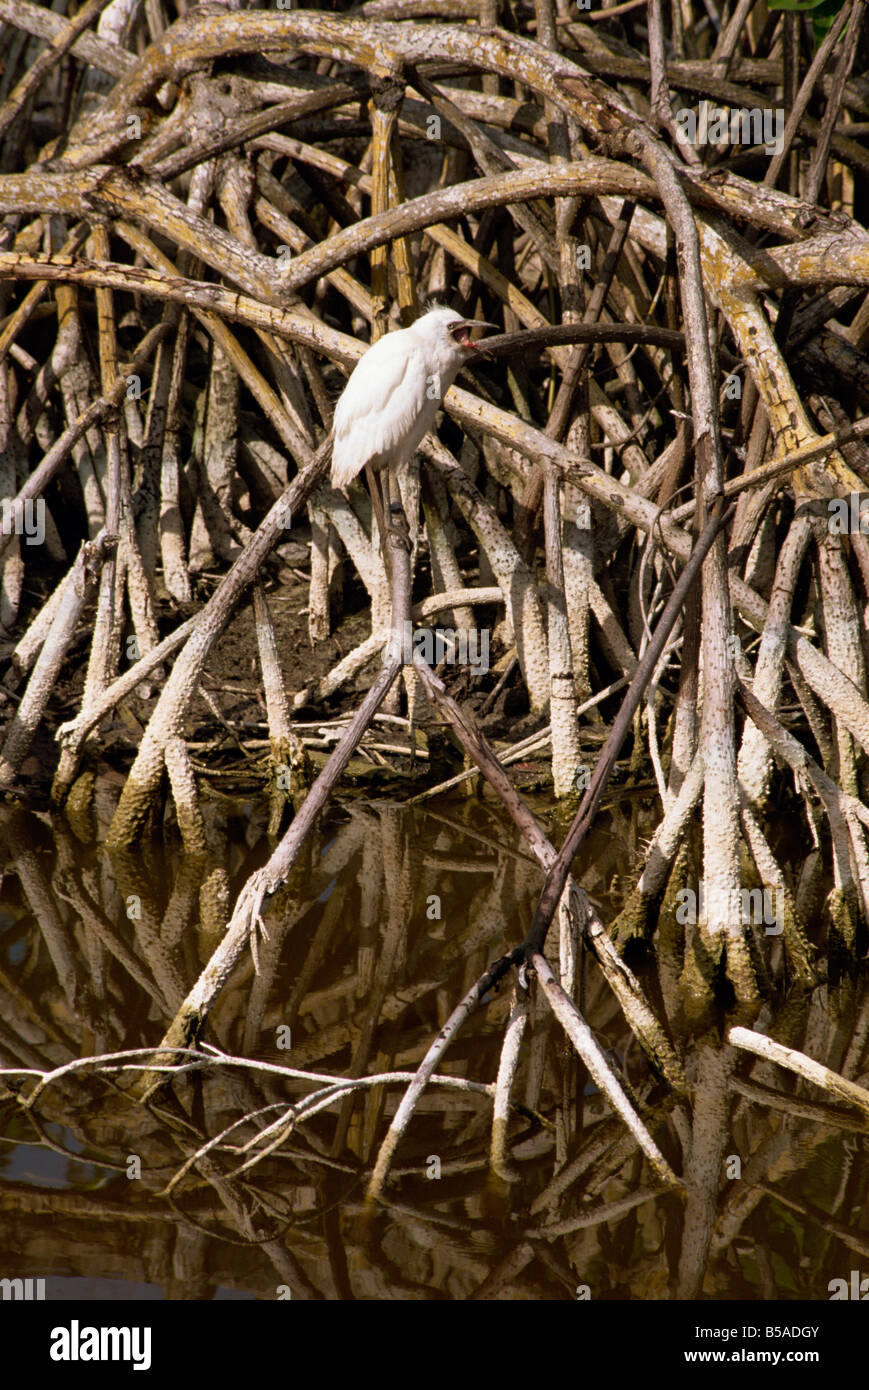 Bird arroccato di mangrovie Giamaica West Indies Caraibi America Centrale Foto Stock